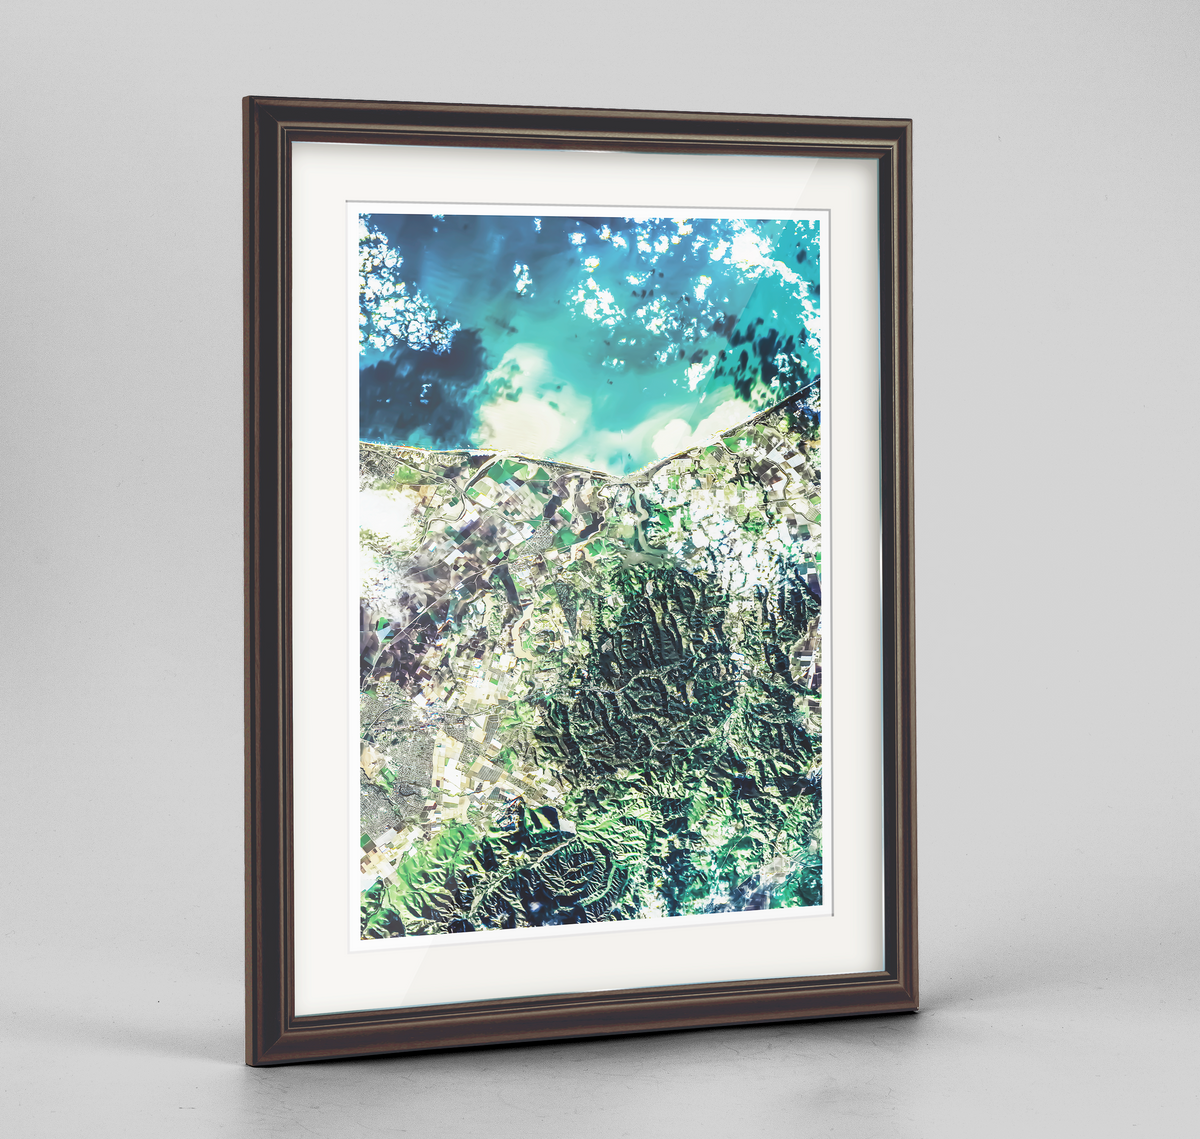 Monterey Bay Earth Photography Art Print - Framed